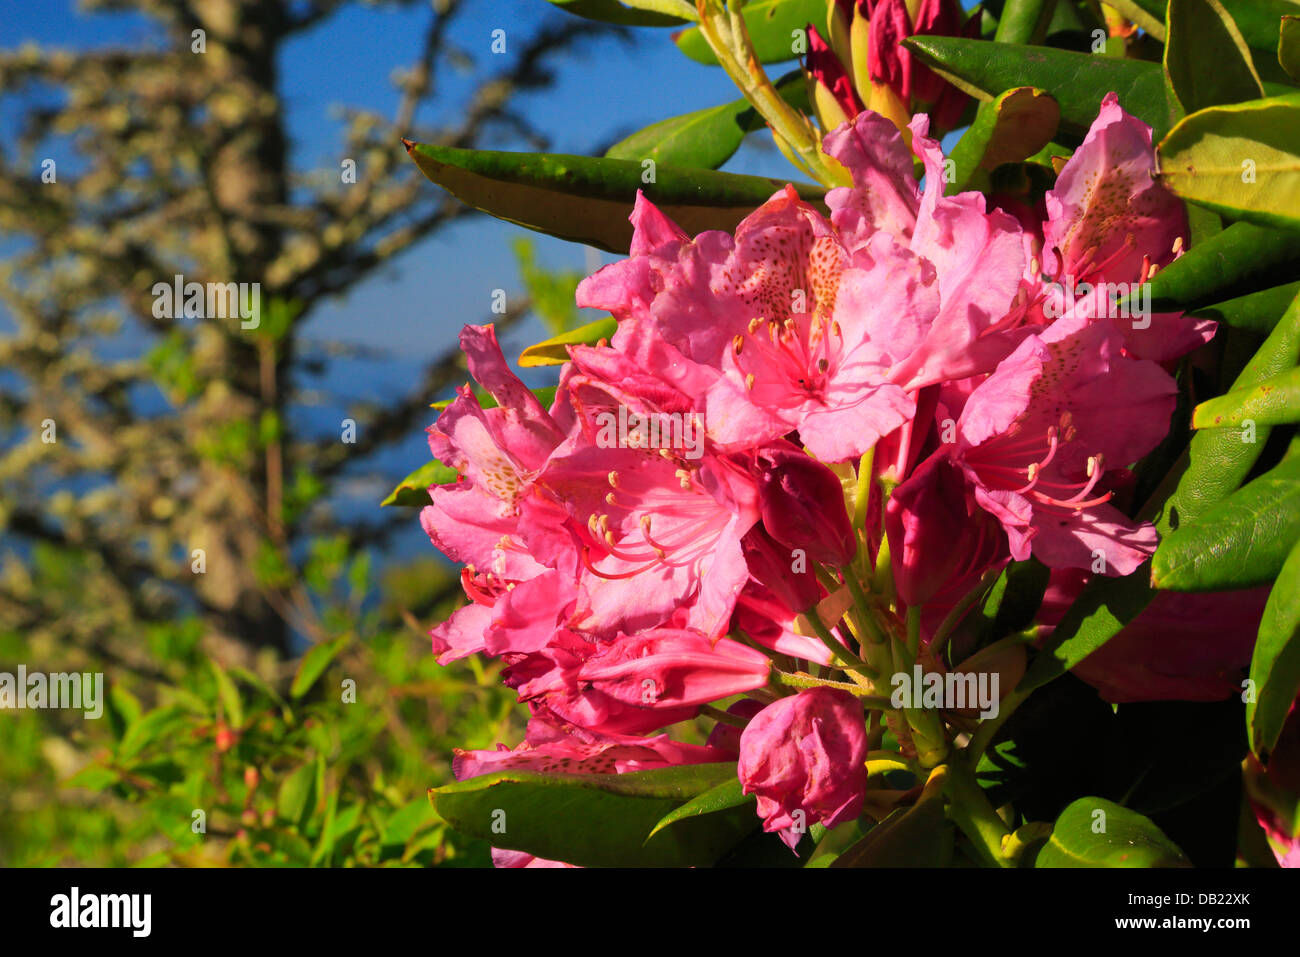 Rhododendron, Andrews Bald, Great Smoky Mountains National Park, North Carolina, USA Stock Photo